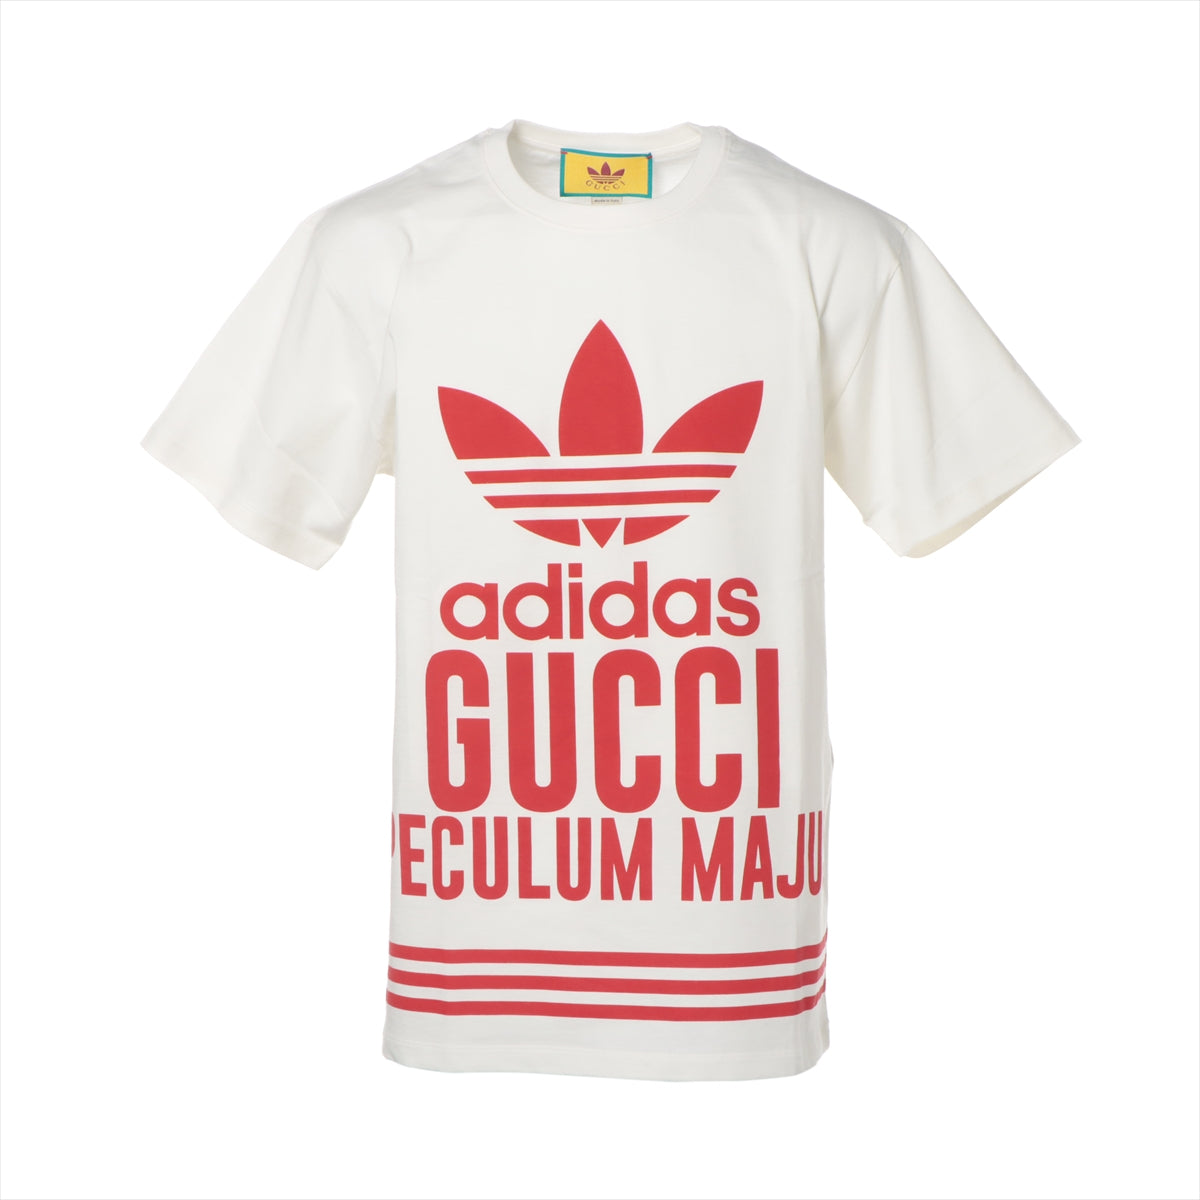 Gucci X Adidas Cotton  XS  Red X White 717422